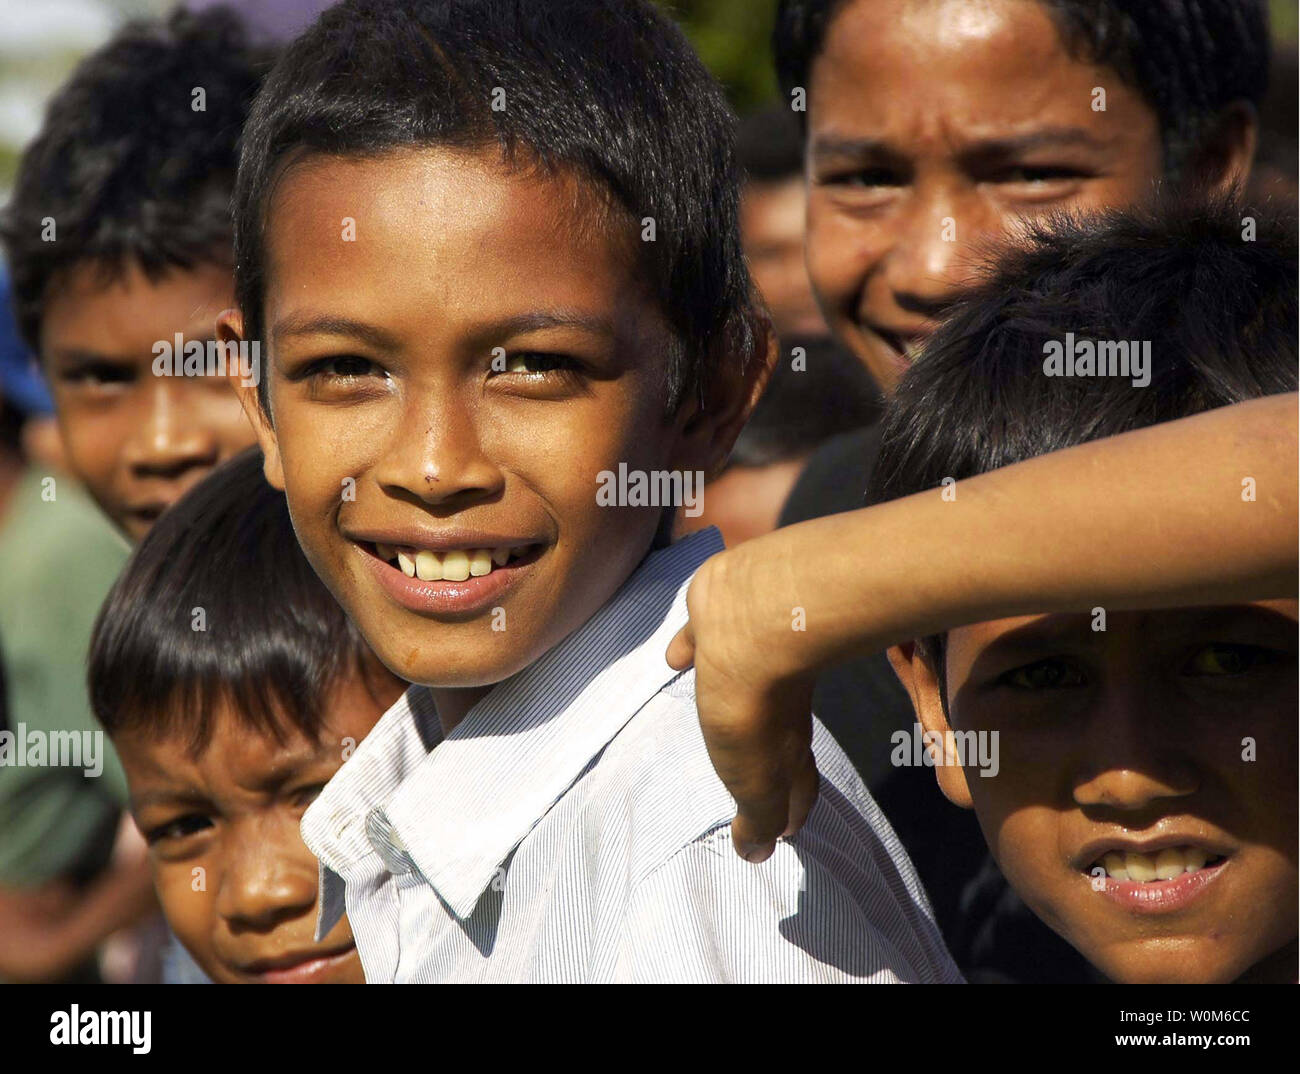 Island of Sumatra, Indonesia (Jan. 7, 2005) – Indonesian children from ...